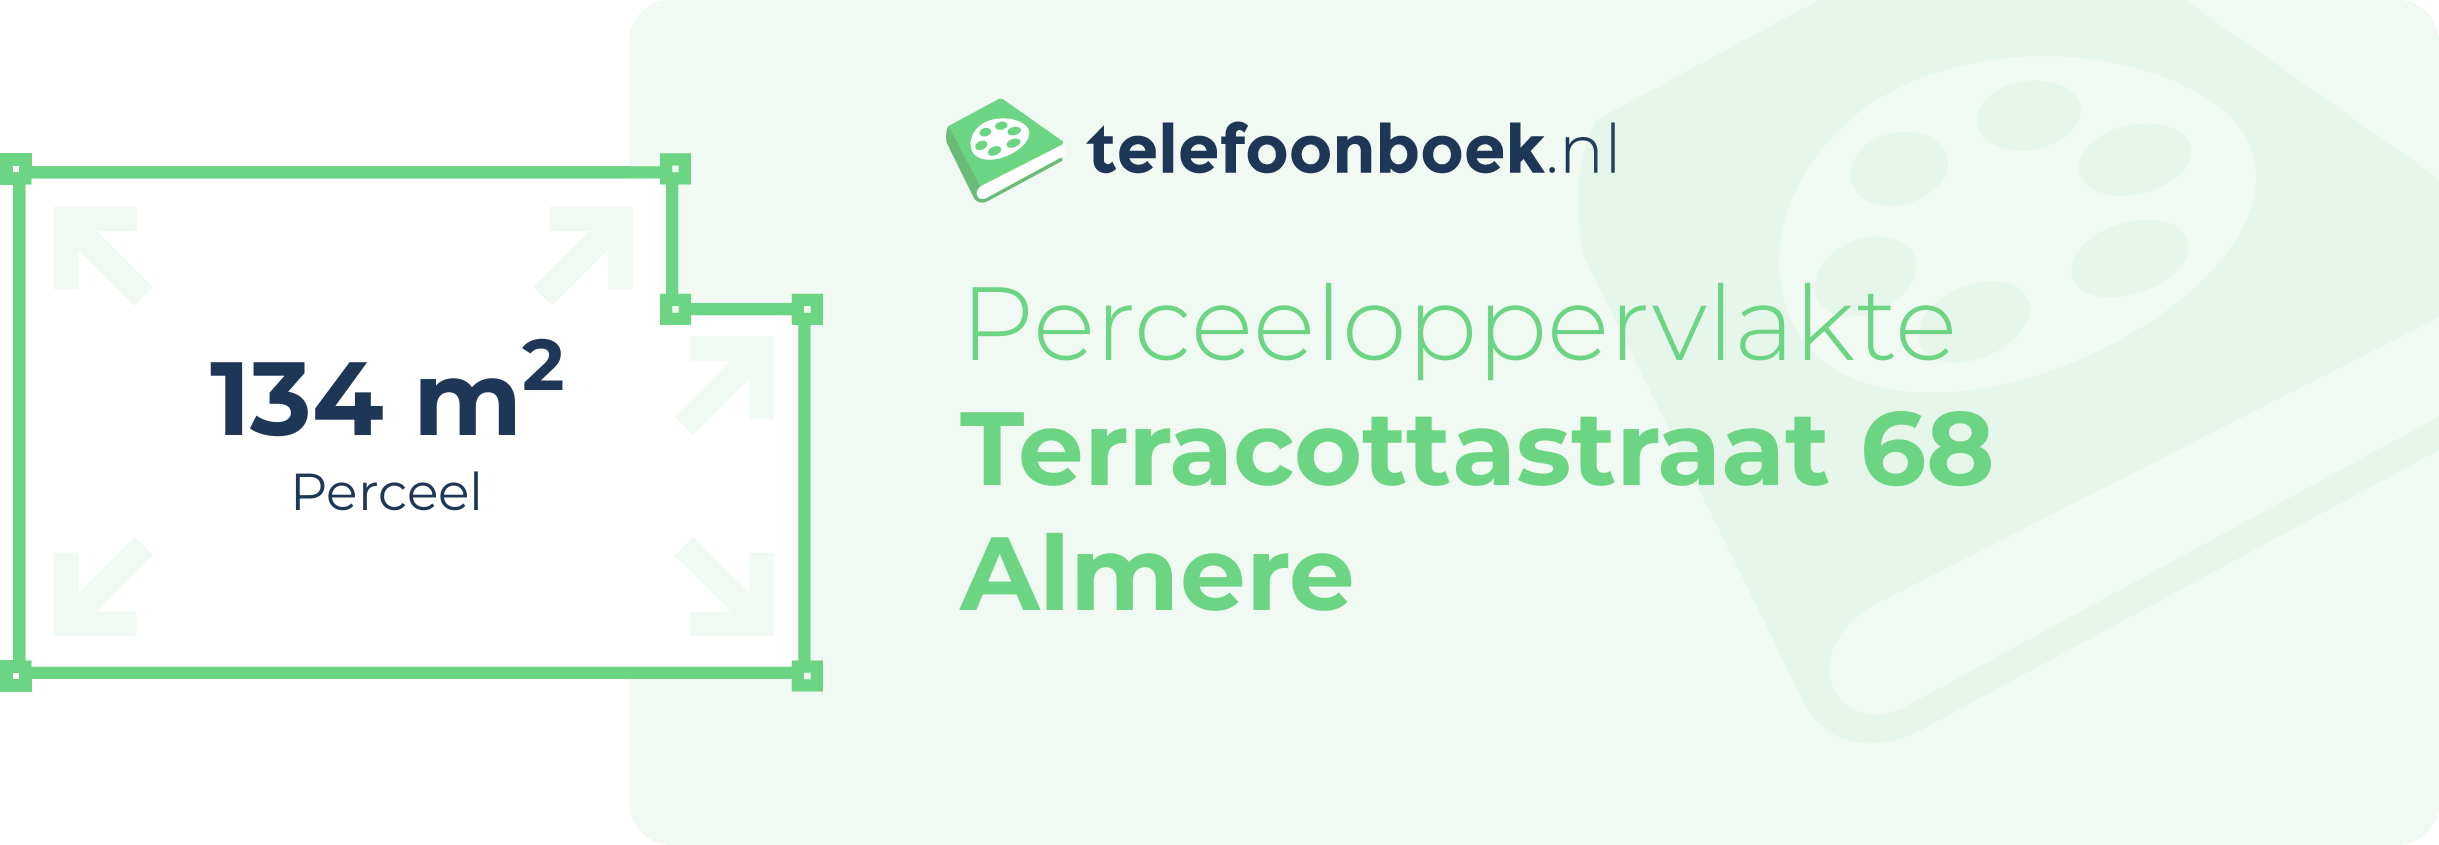 Perceeloppervlakte Terracottastraat 68 Almere